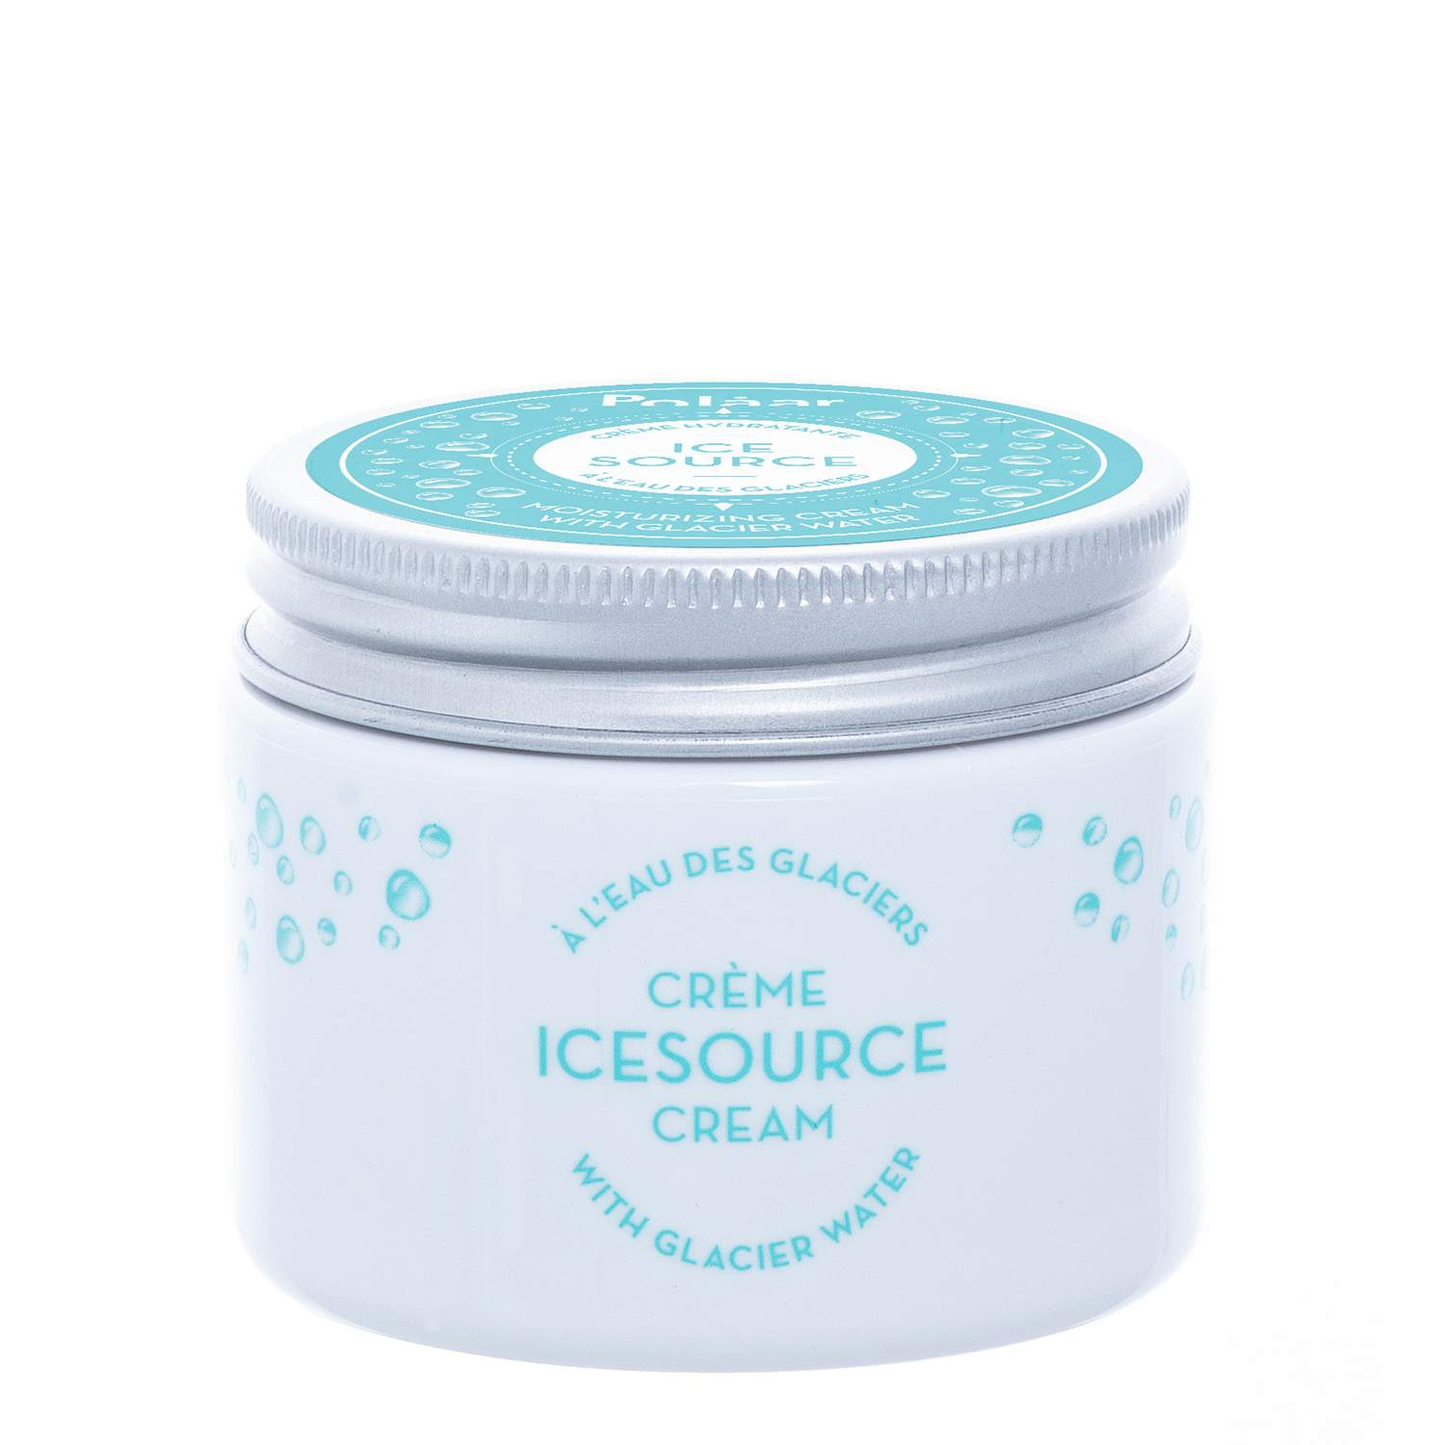 Polaar Icesource Moisturizing Cream with Glacier Water